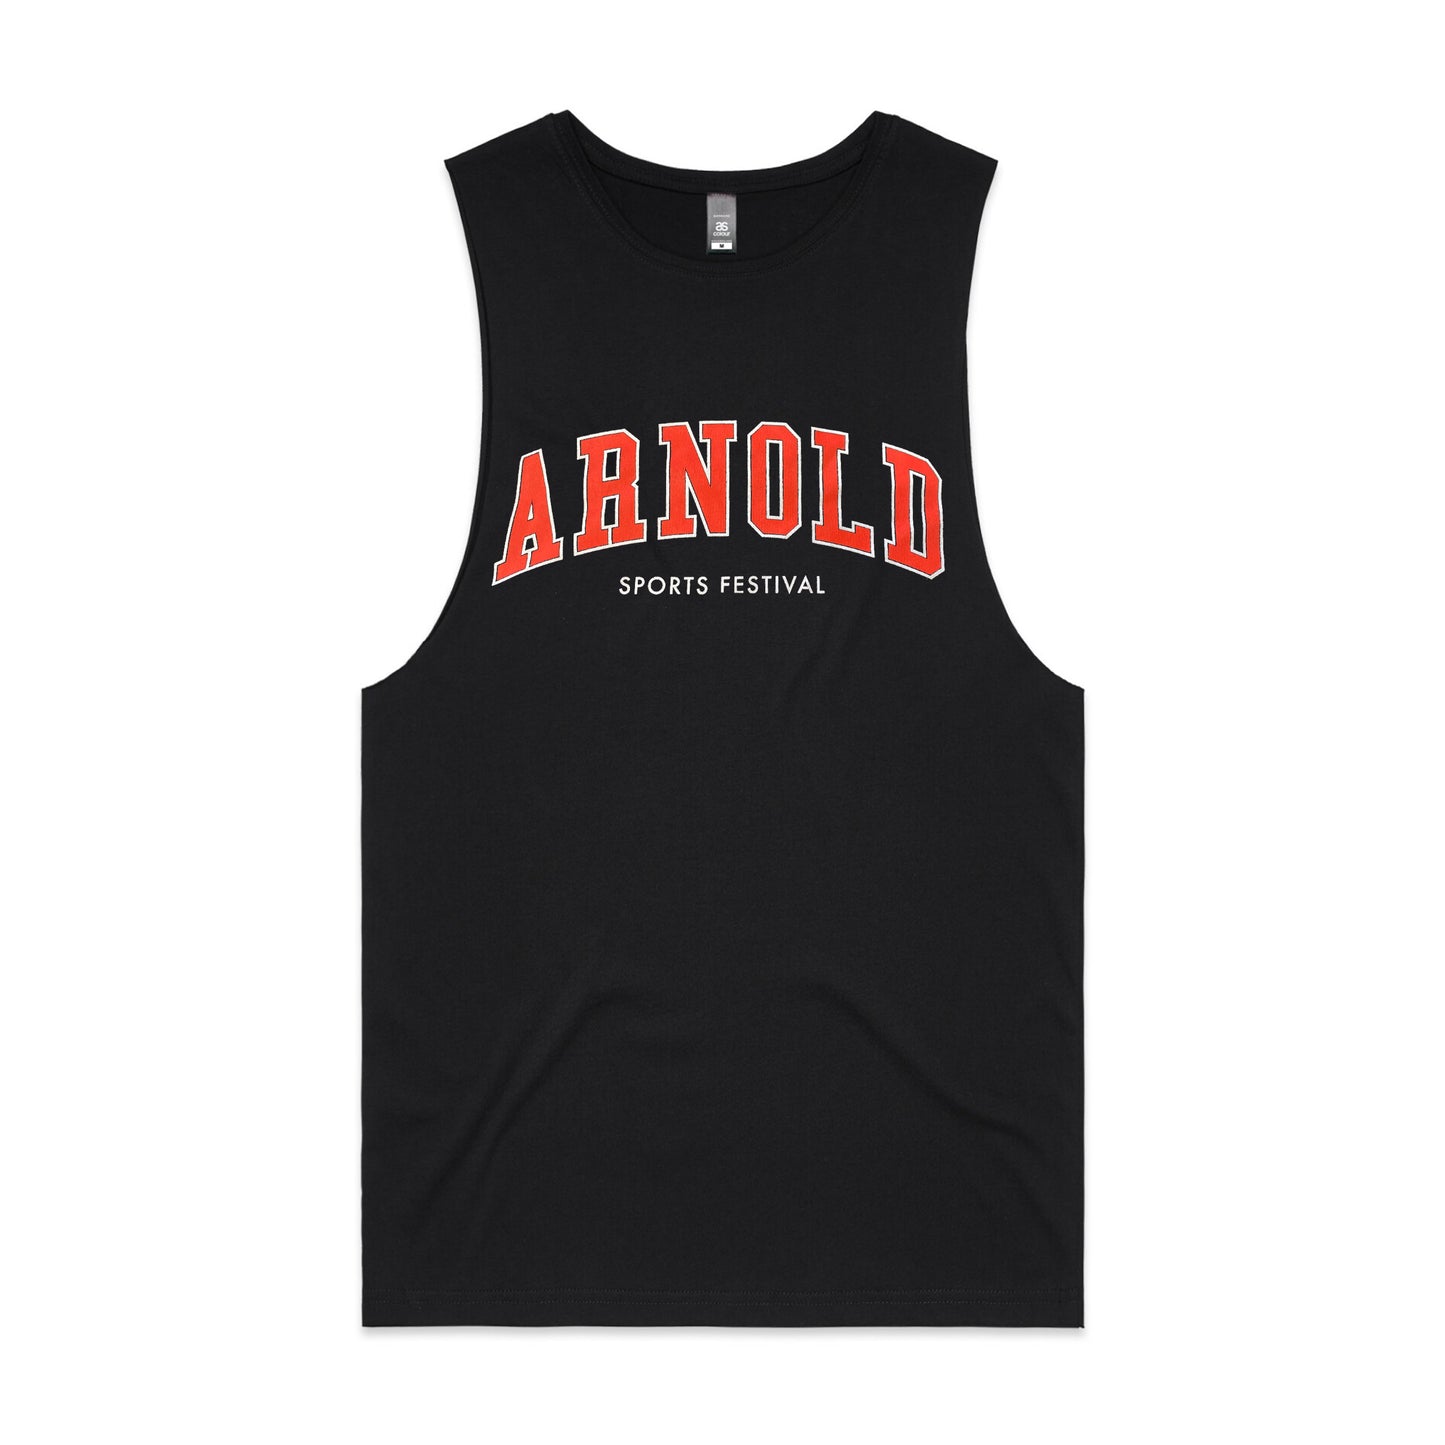 Arnold Tank